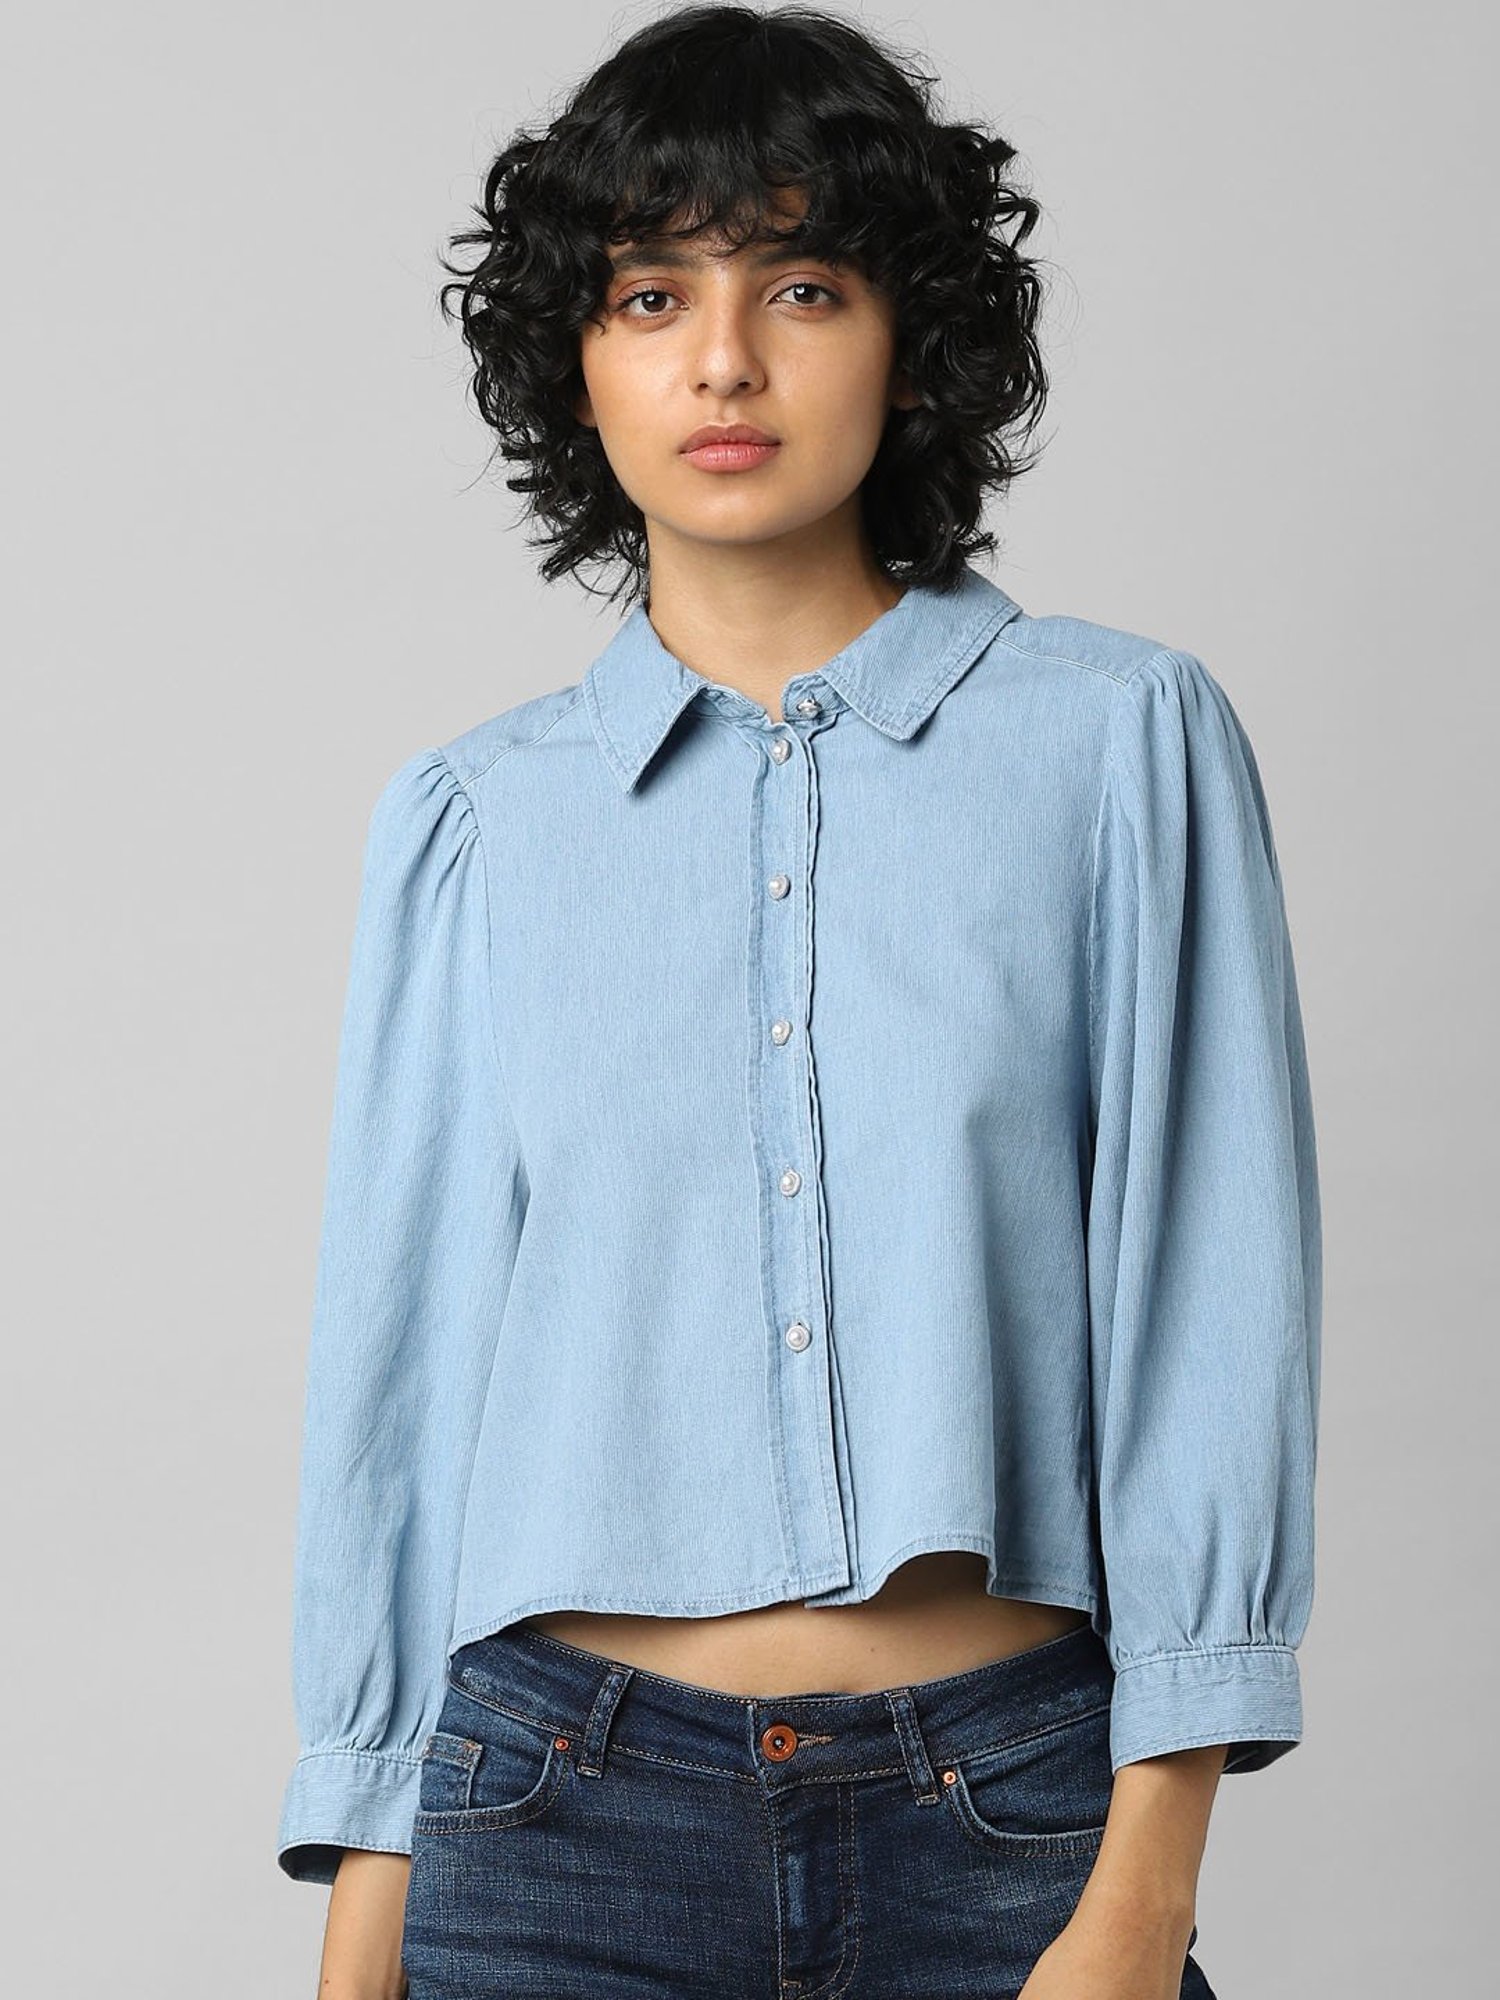 Buy Vintage Jean Shirt 80s Light Blue Denim Shirt Women Size Medium Short  Sleeve Denim Collared Oxford Button up Jean Shirt Vintage Cothing Online in  India - Etsy